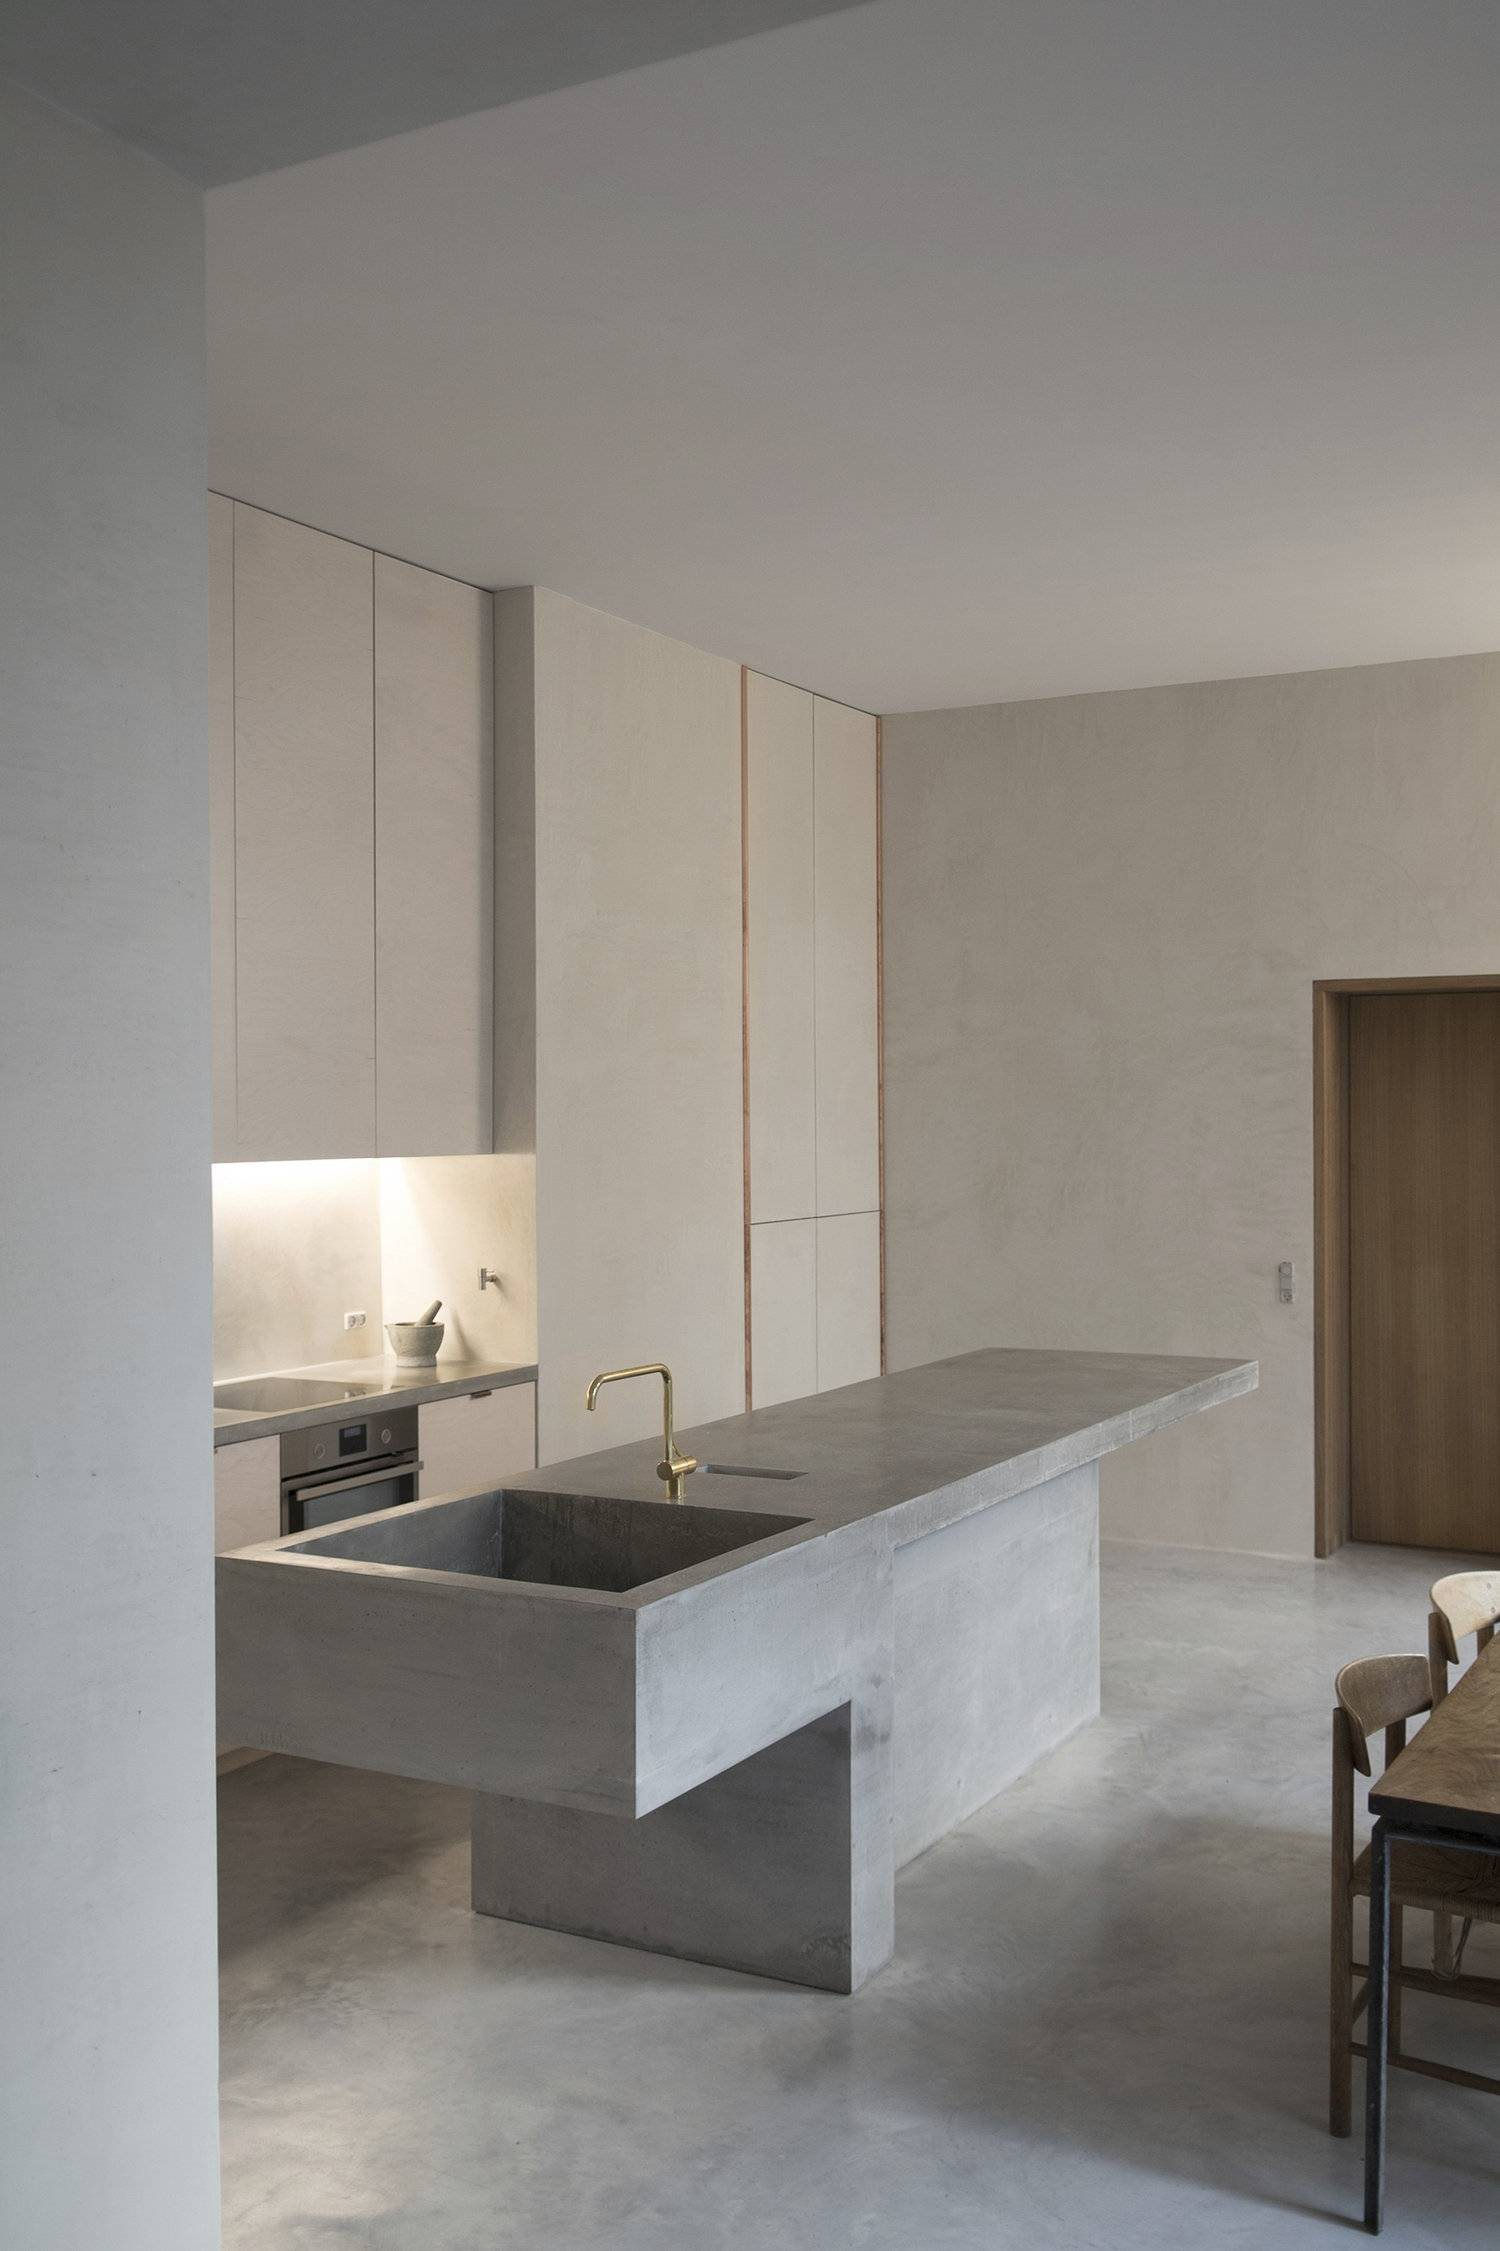 minimalist-kitchen-design-photo-by-leo-lei-29663.jpeg